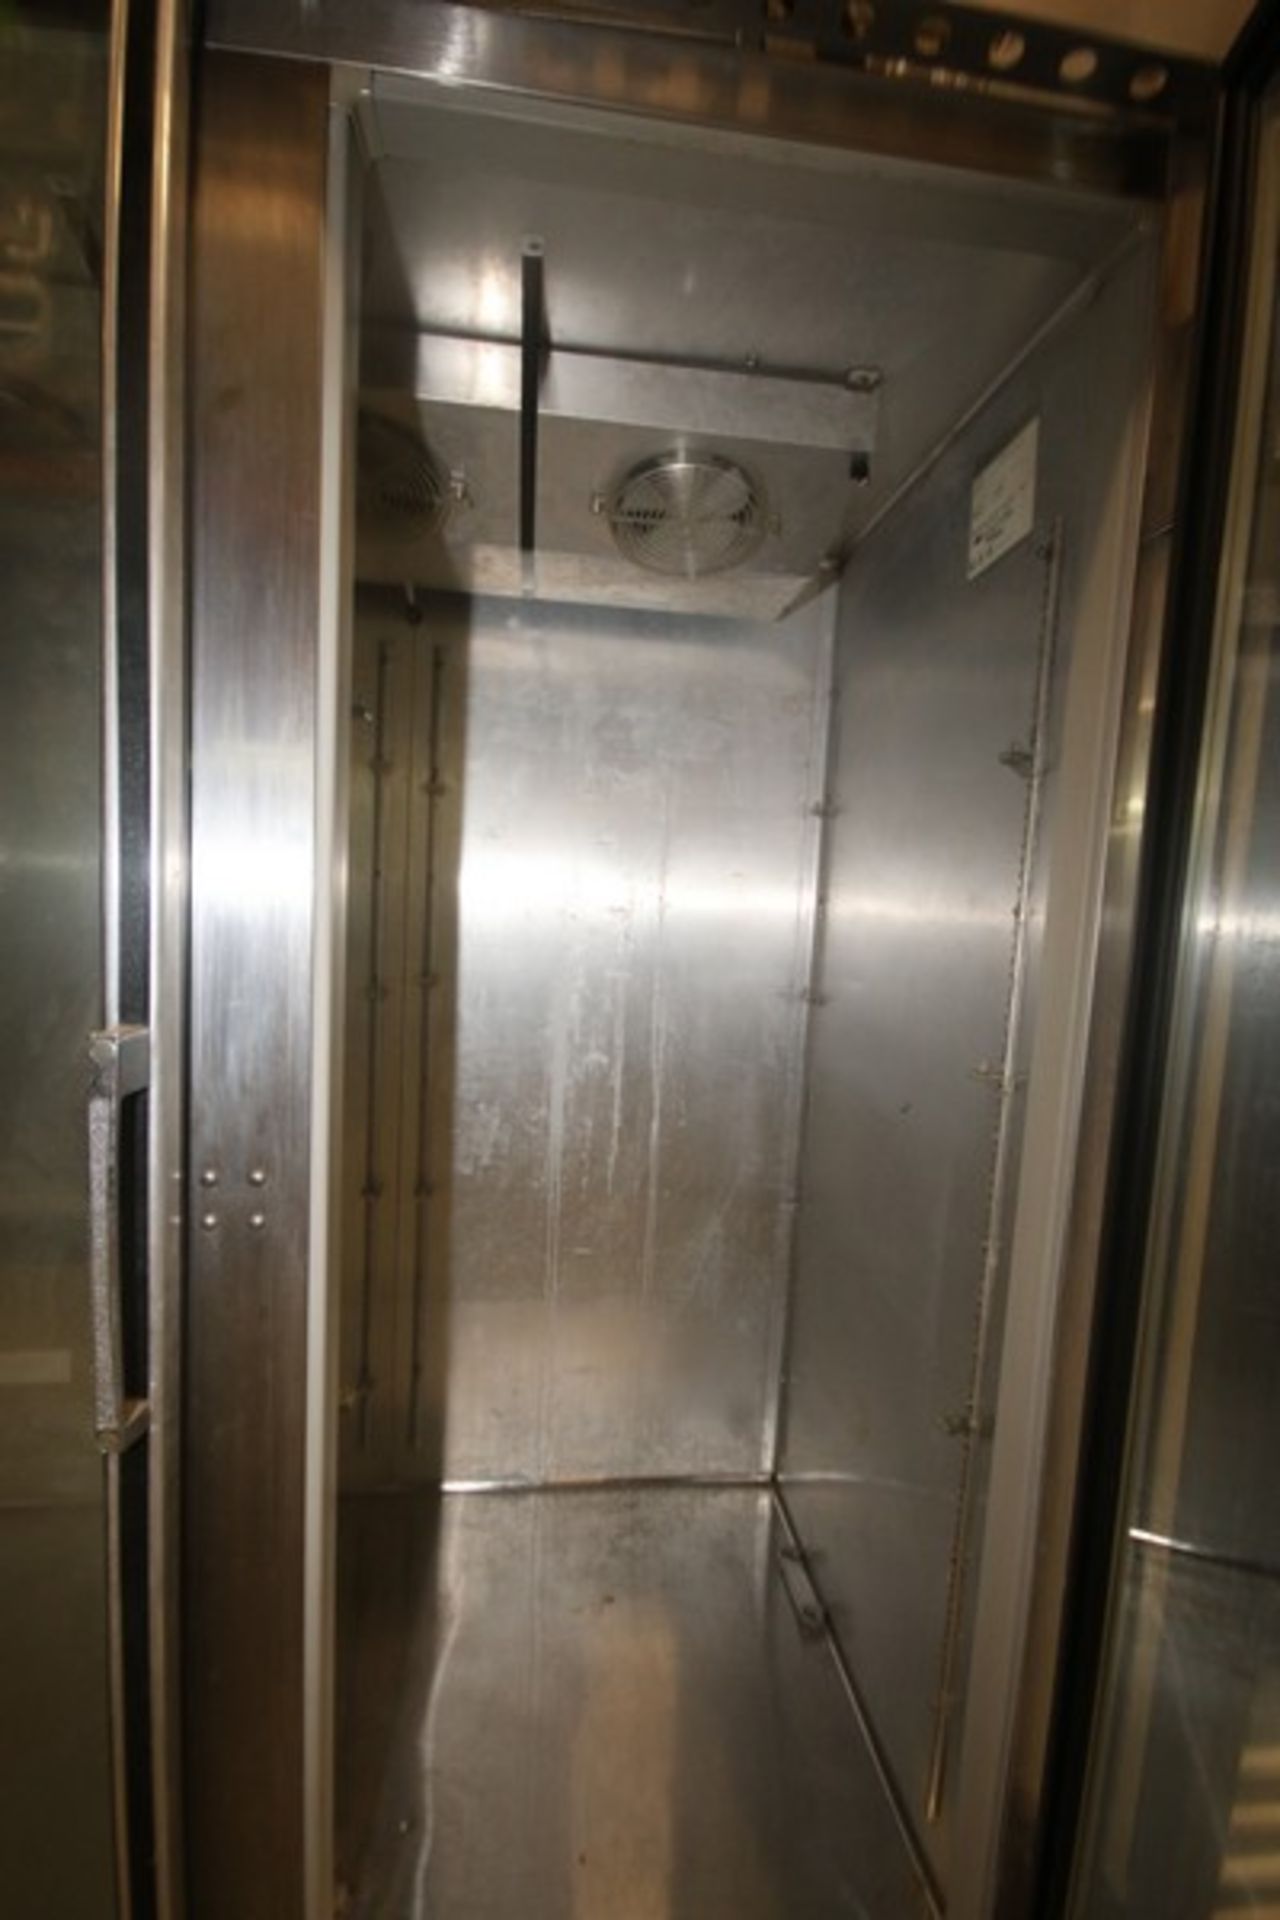 Polar Guest/Glenco Star S/S Refrigerator,M/N PQ-2RGD, S/N NN-424997, with Dual Glass Hinge Doors, - Image 4 of 11